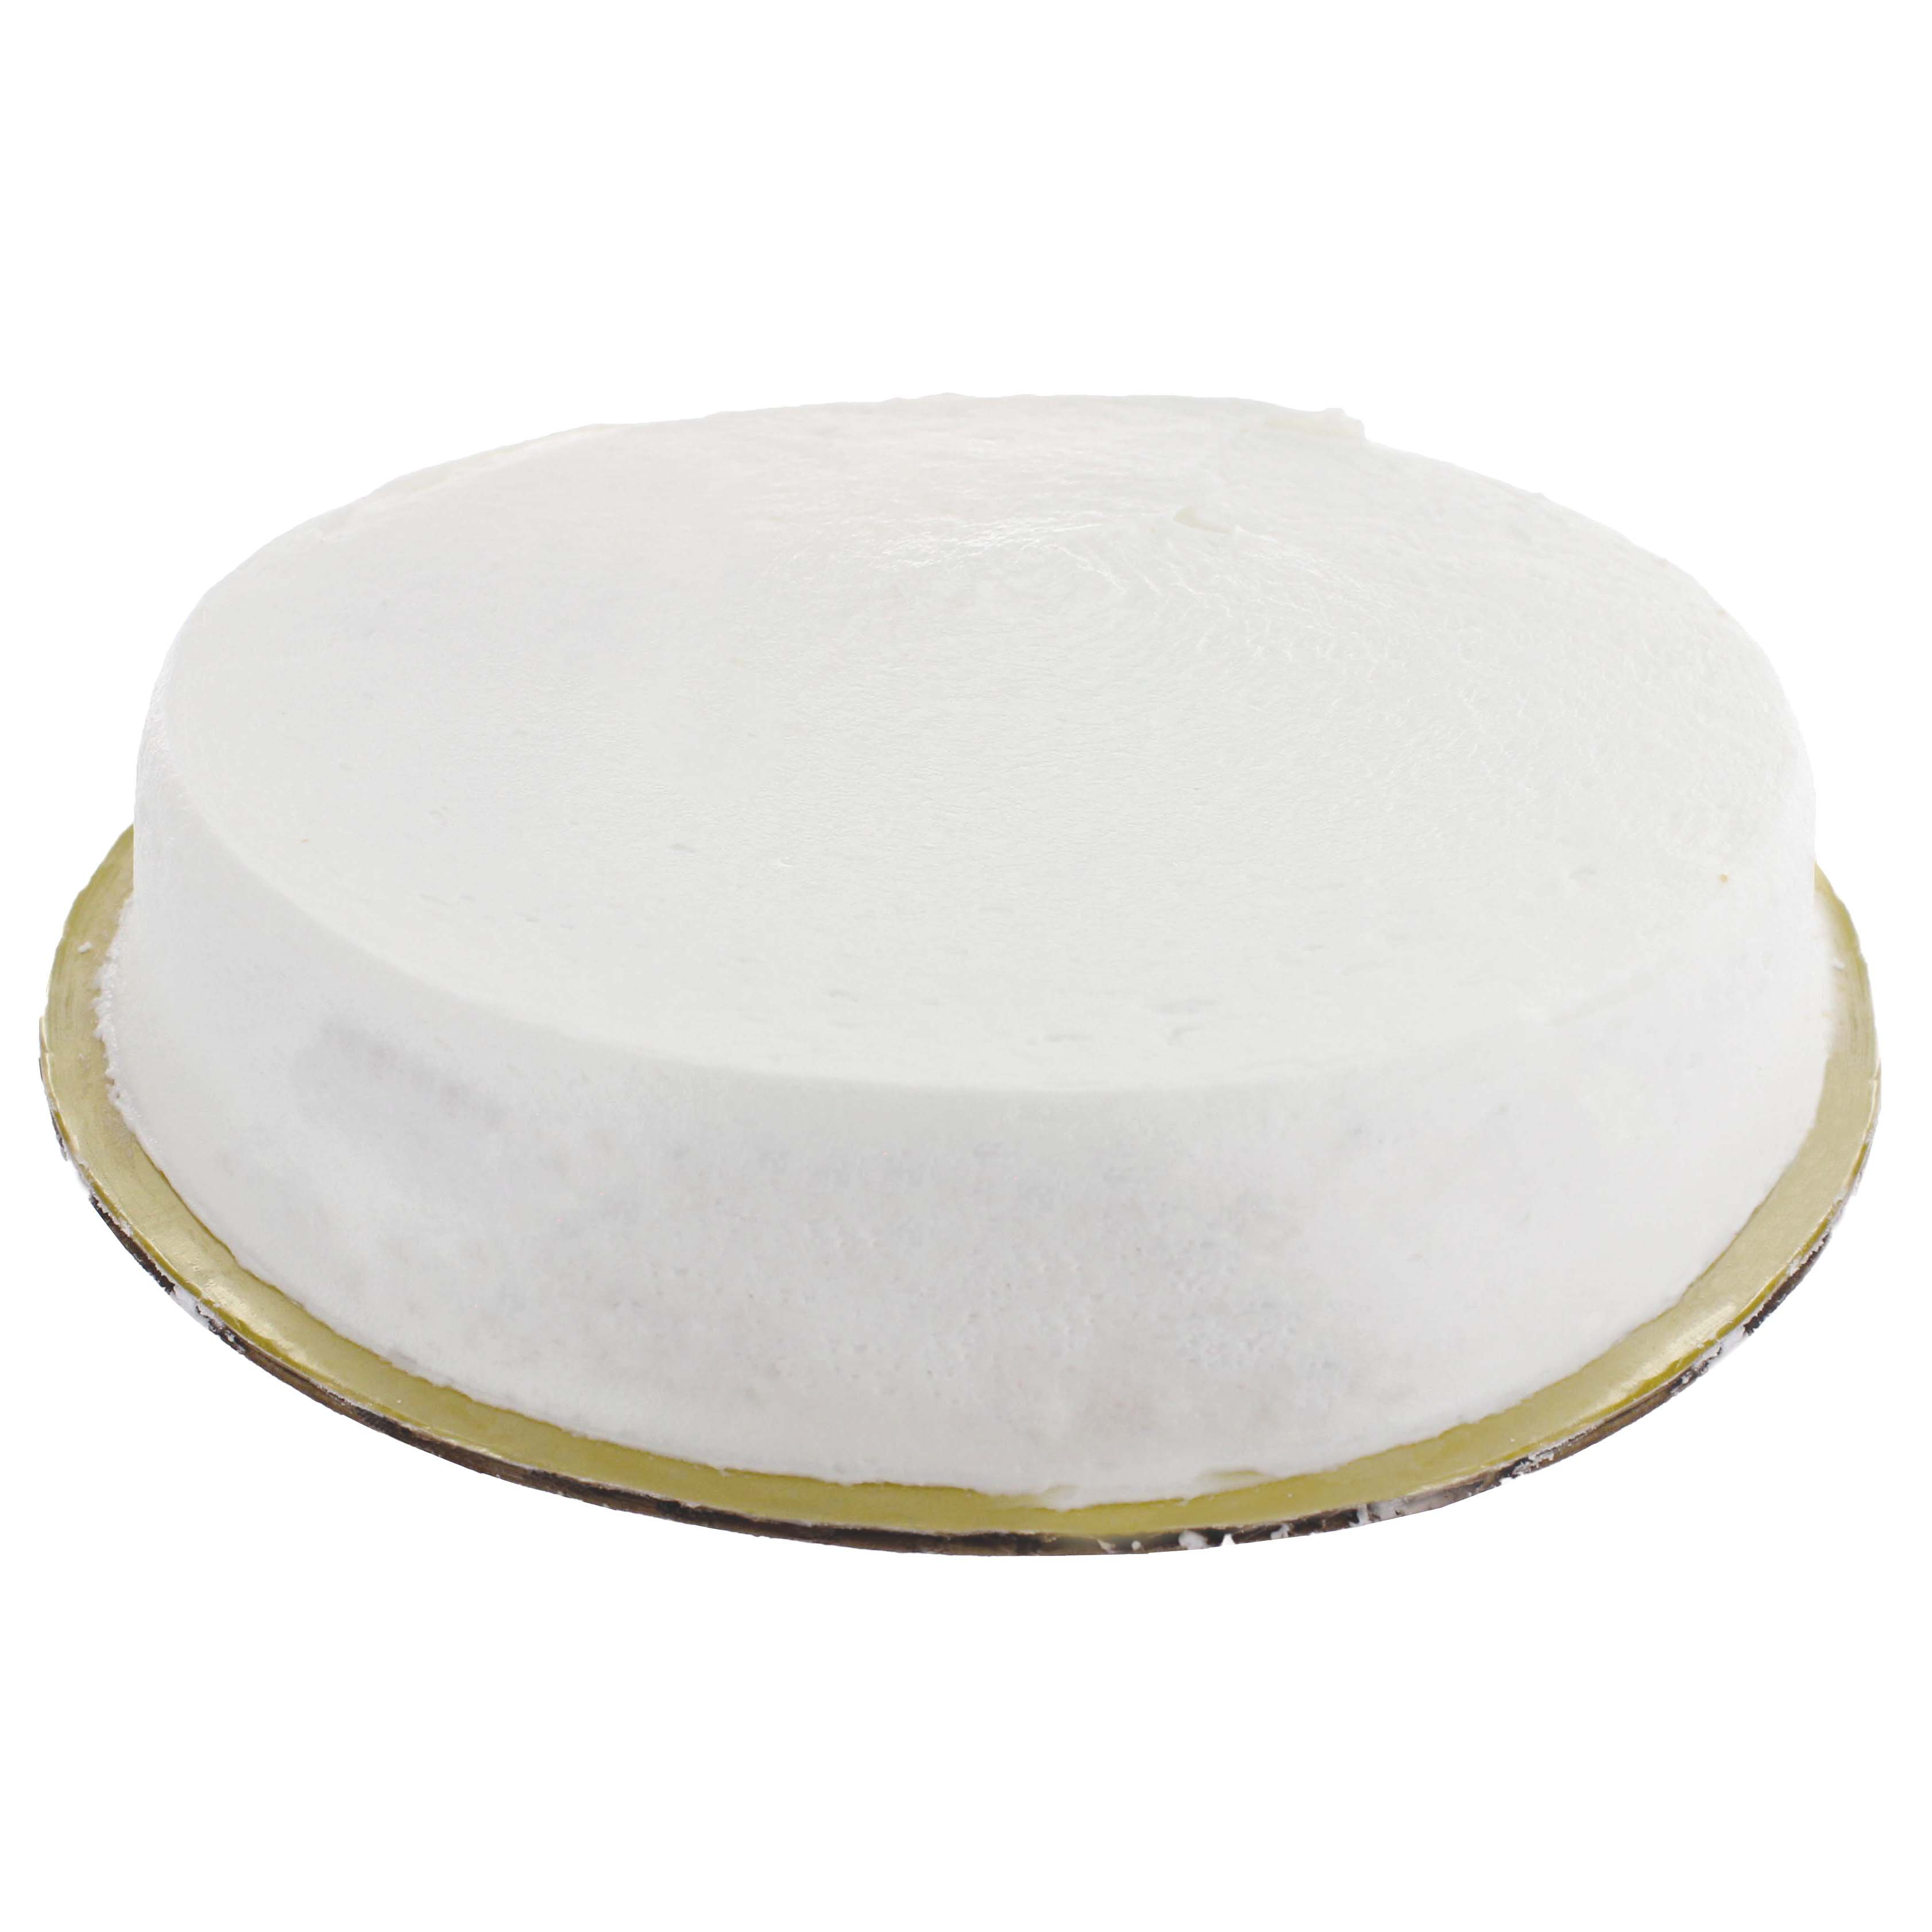 plain white cake